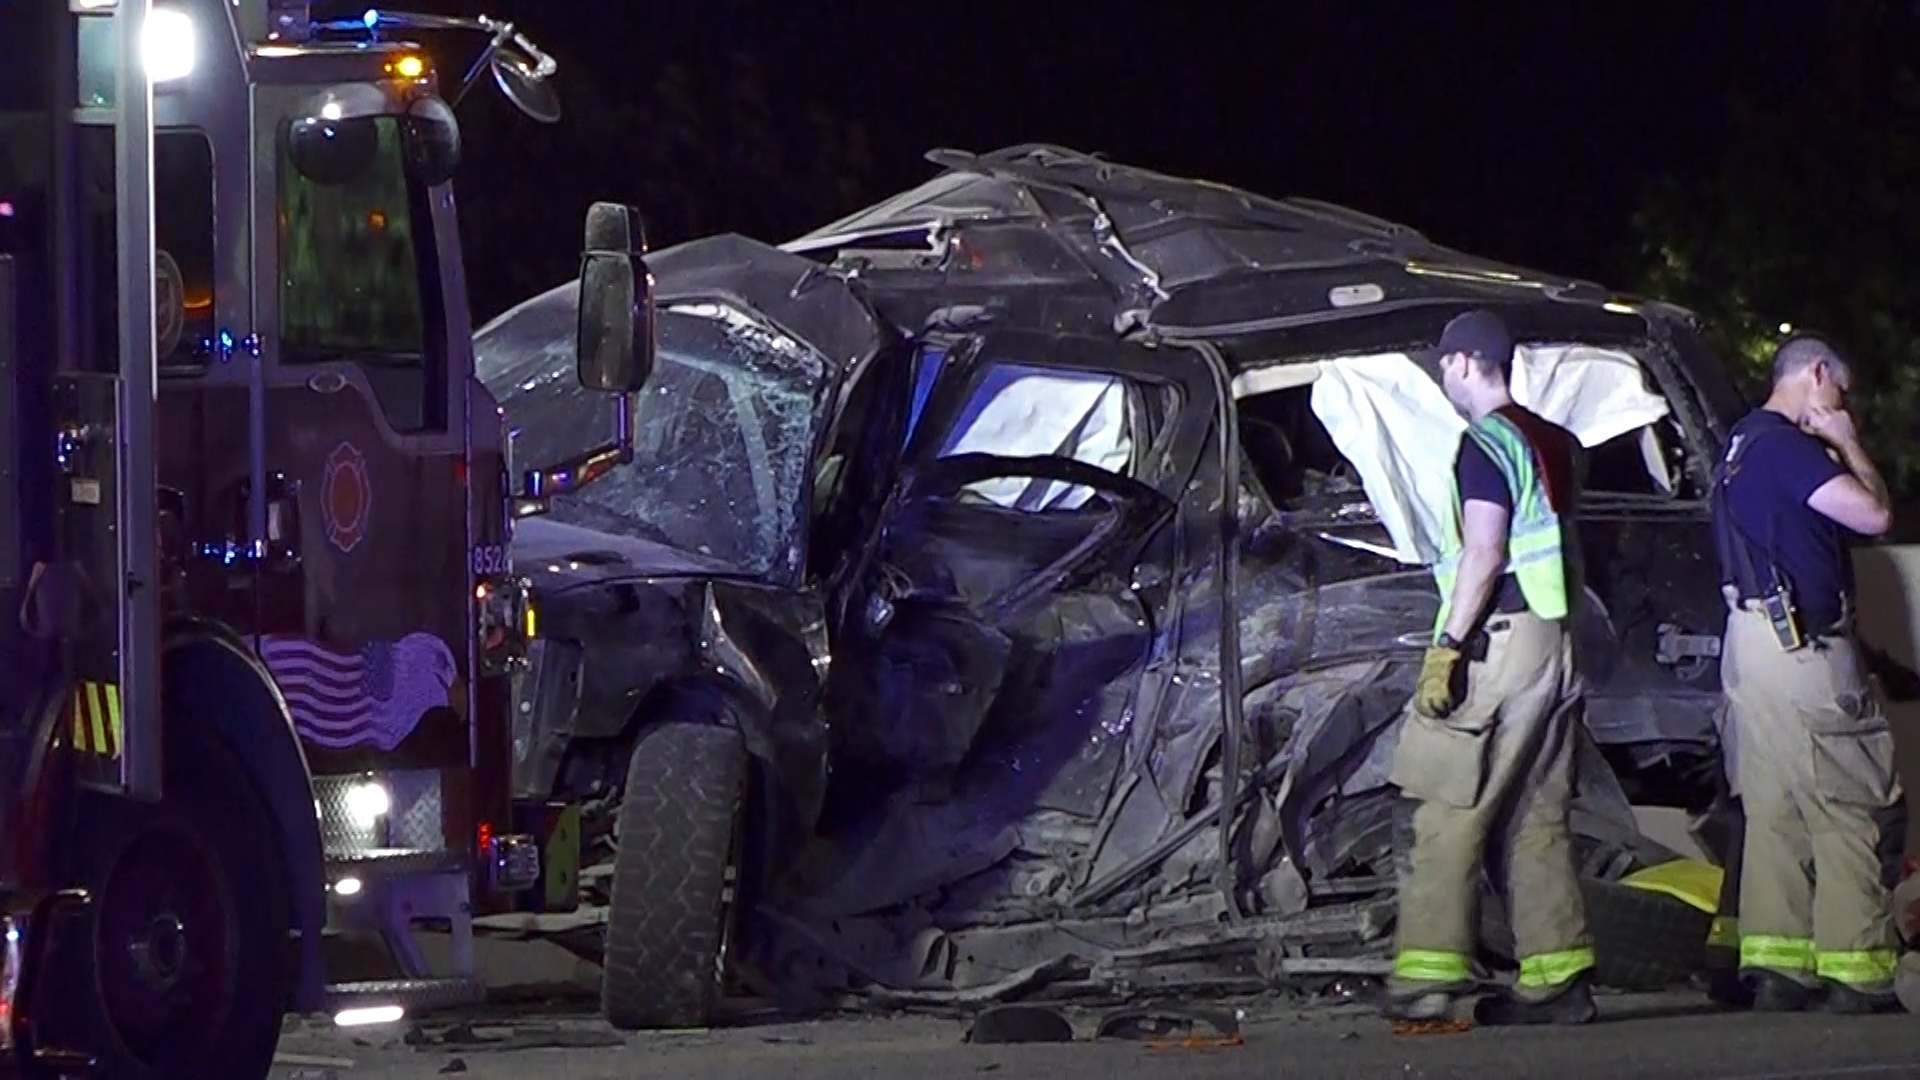 Dallas, Texas crash: Girl hit and killed by car, police say